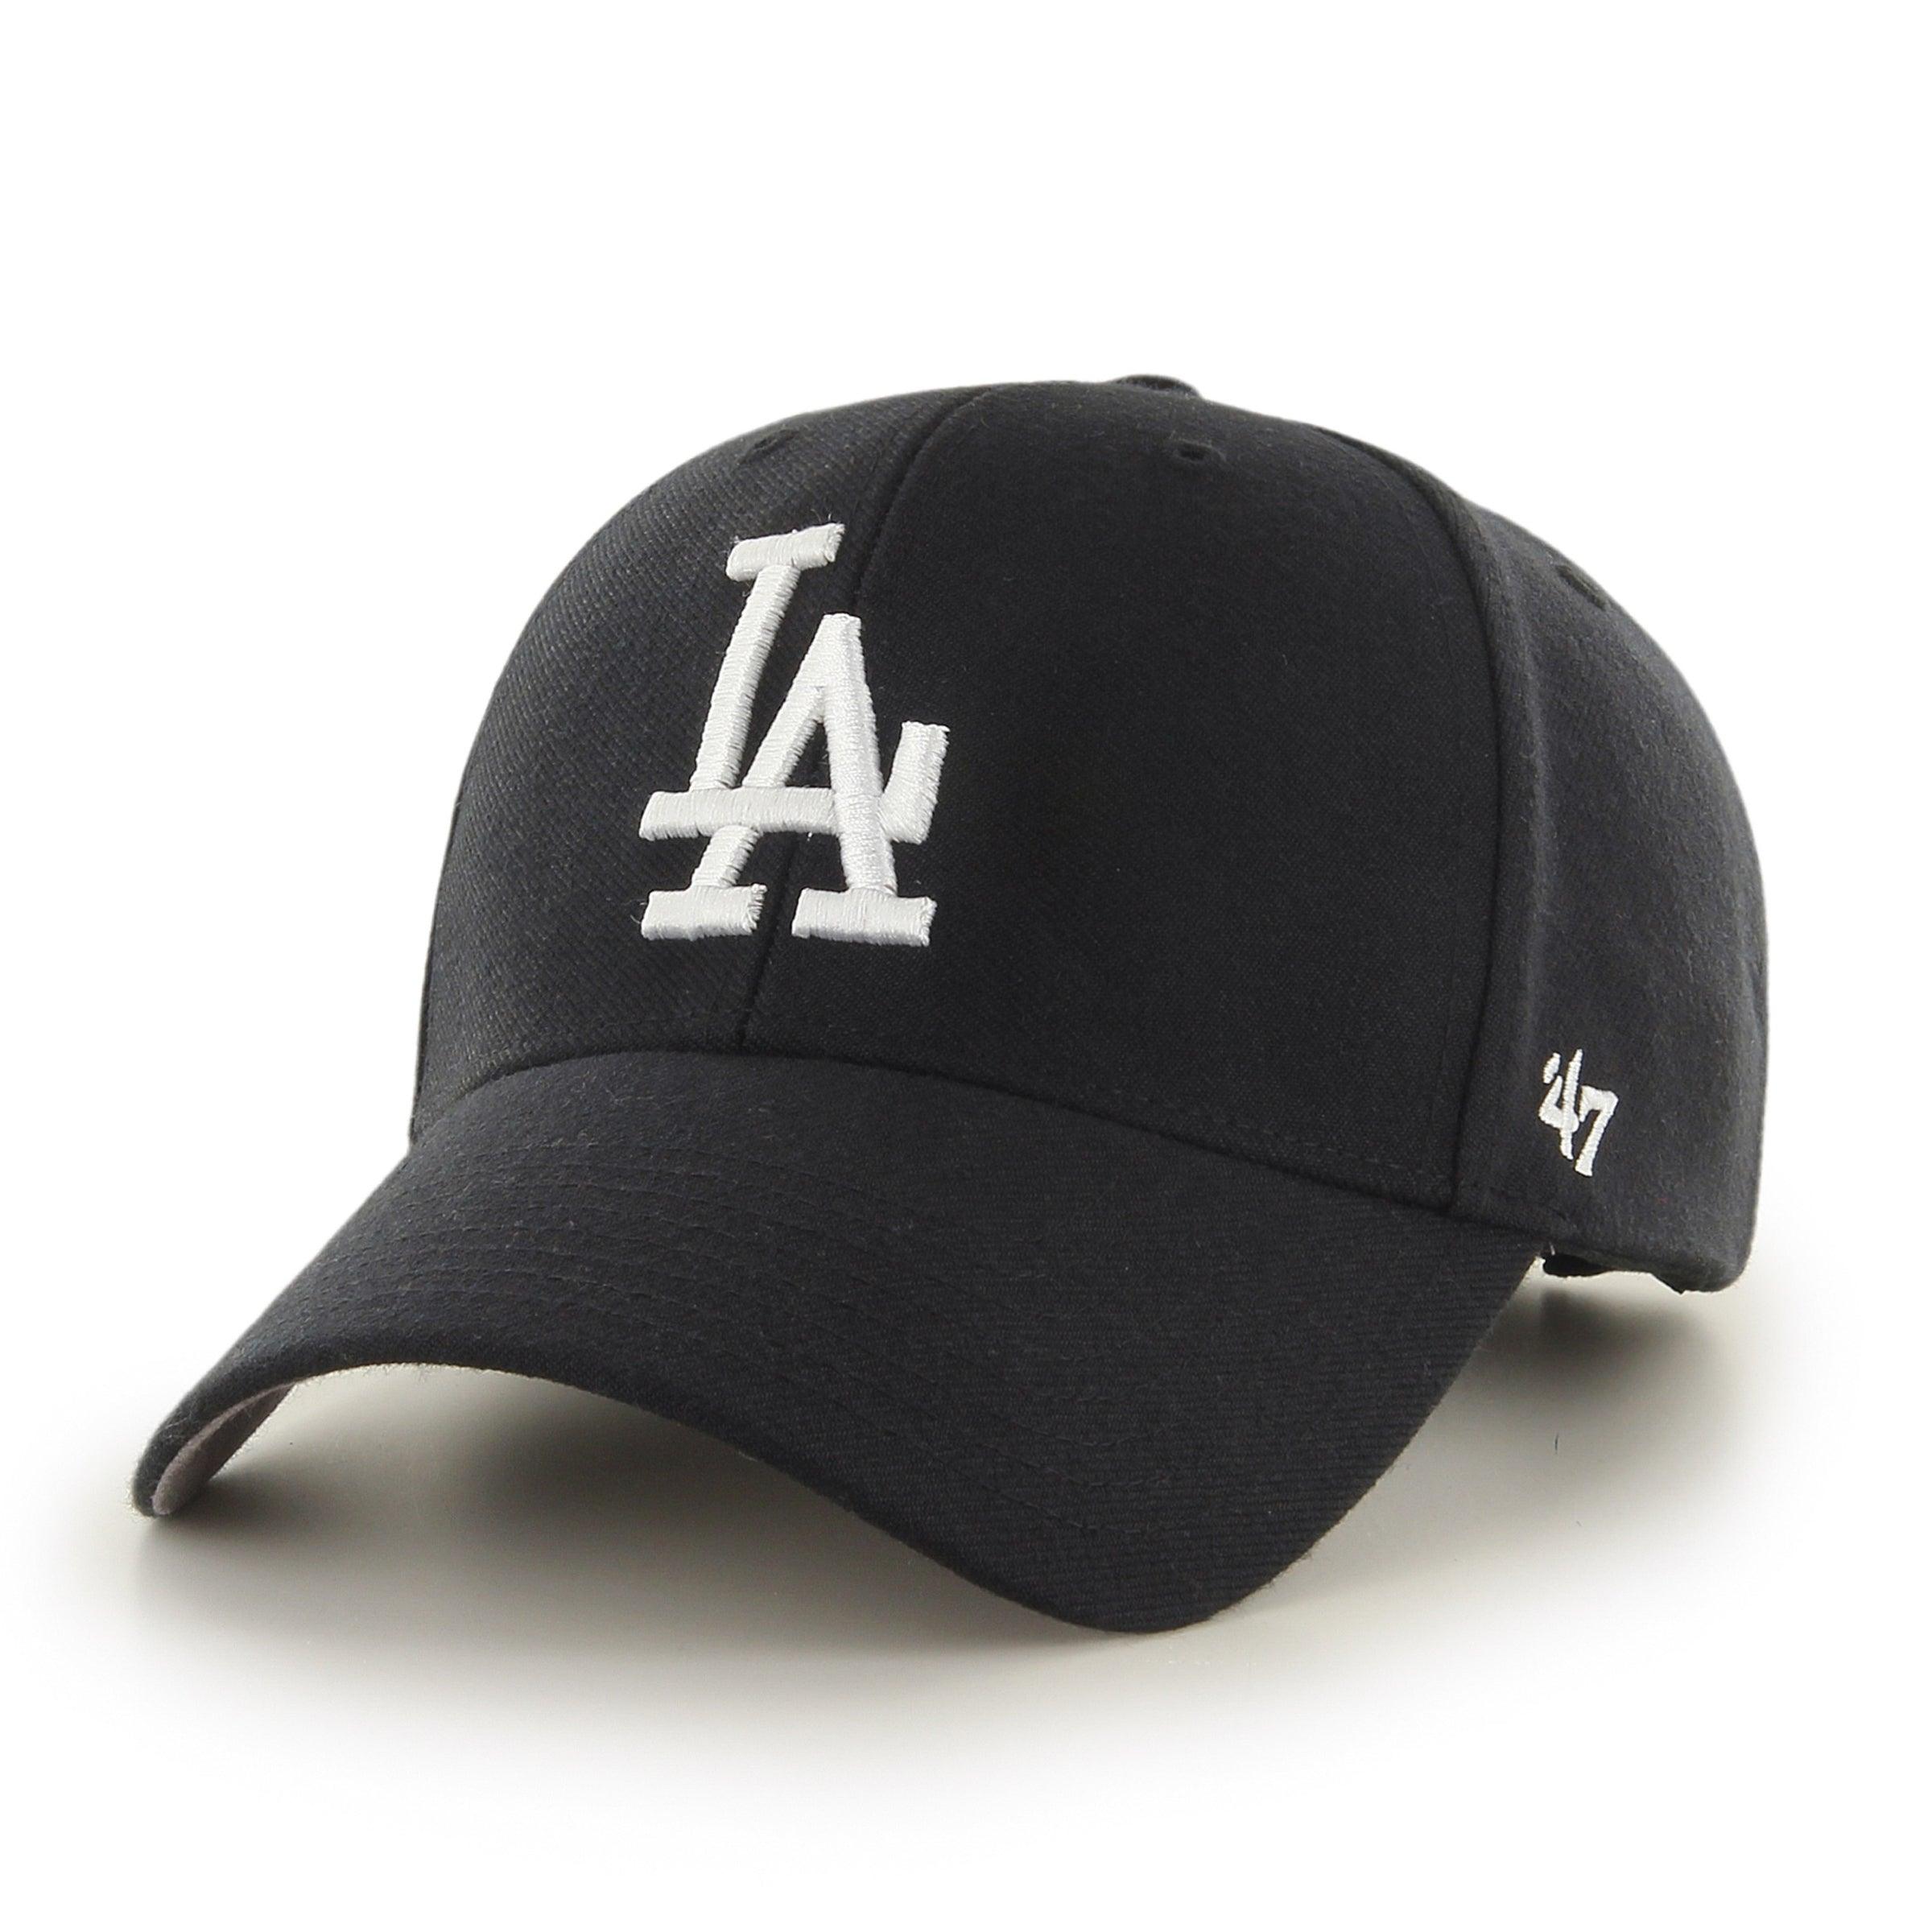 Los Angeles Dodgers Raised Basic Mvp Rose/White Dad Cap - 47 Brand cap